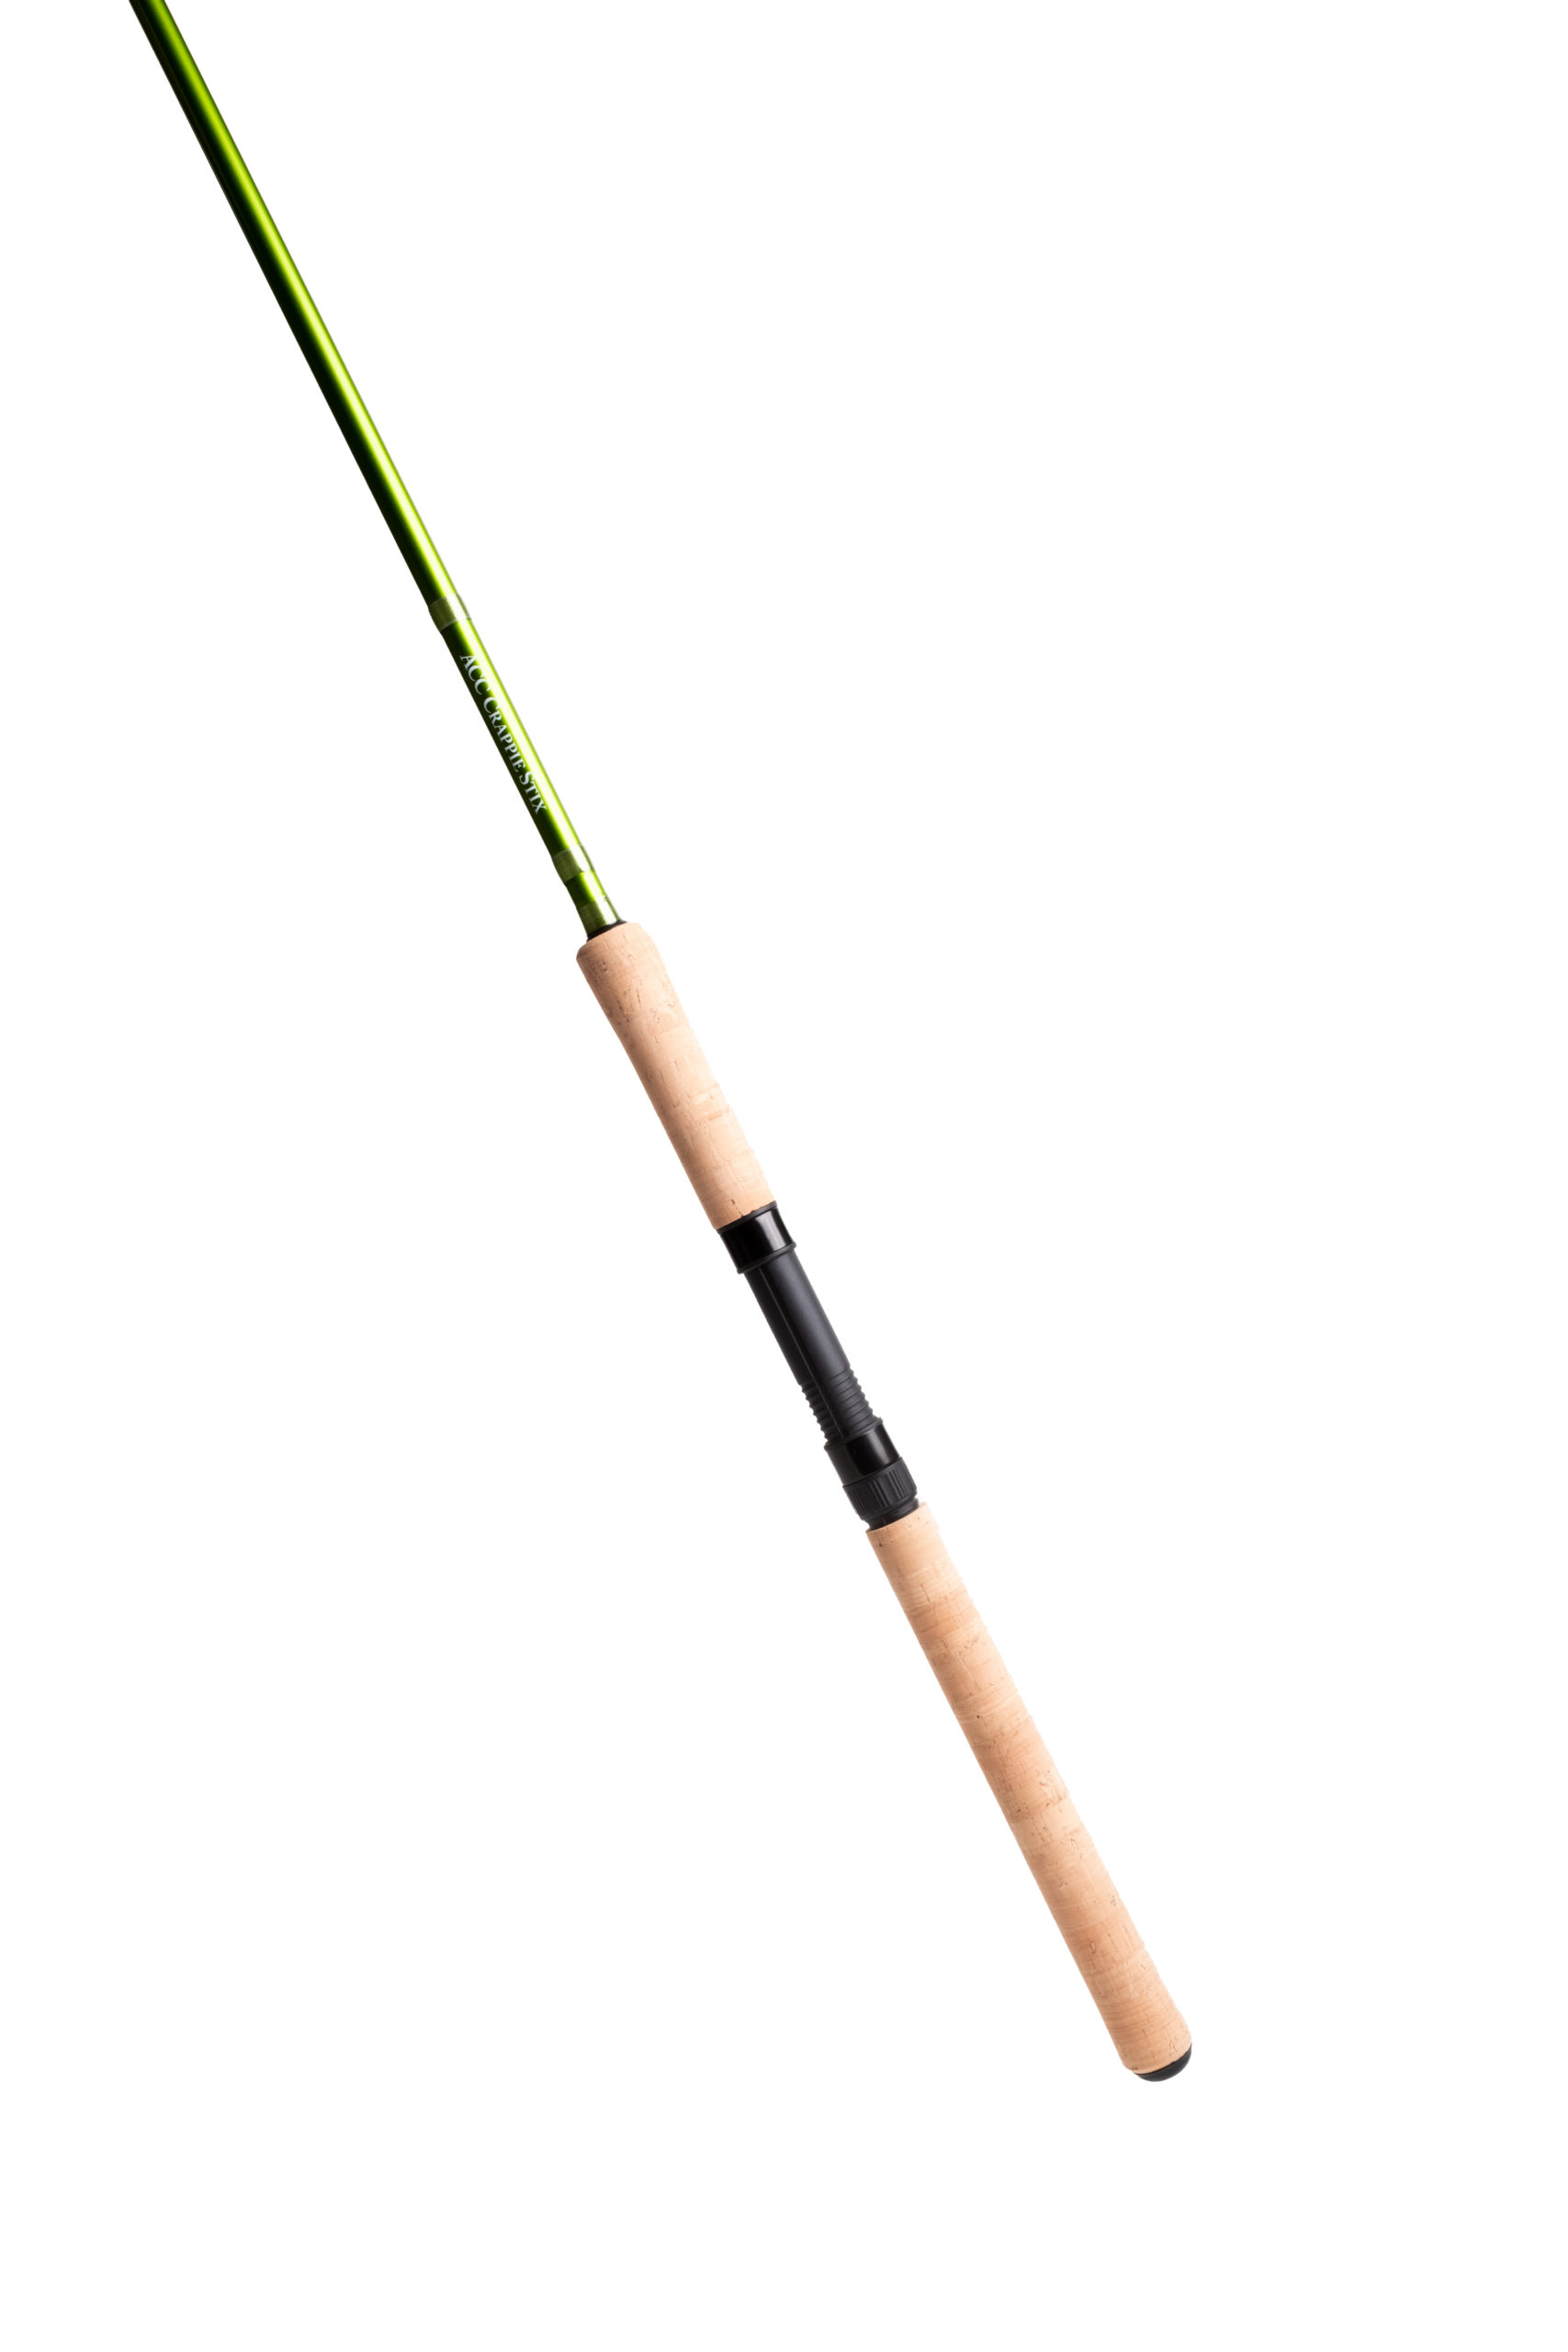 GS12M Green Series 12′ Jigging rod w/ Cork handle